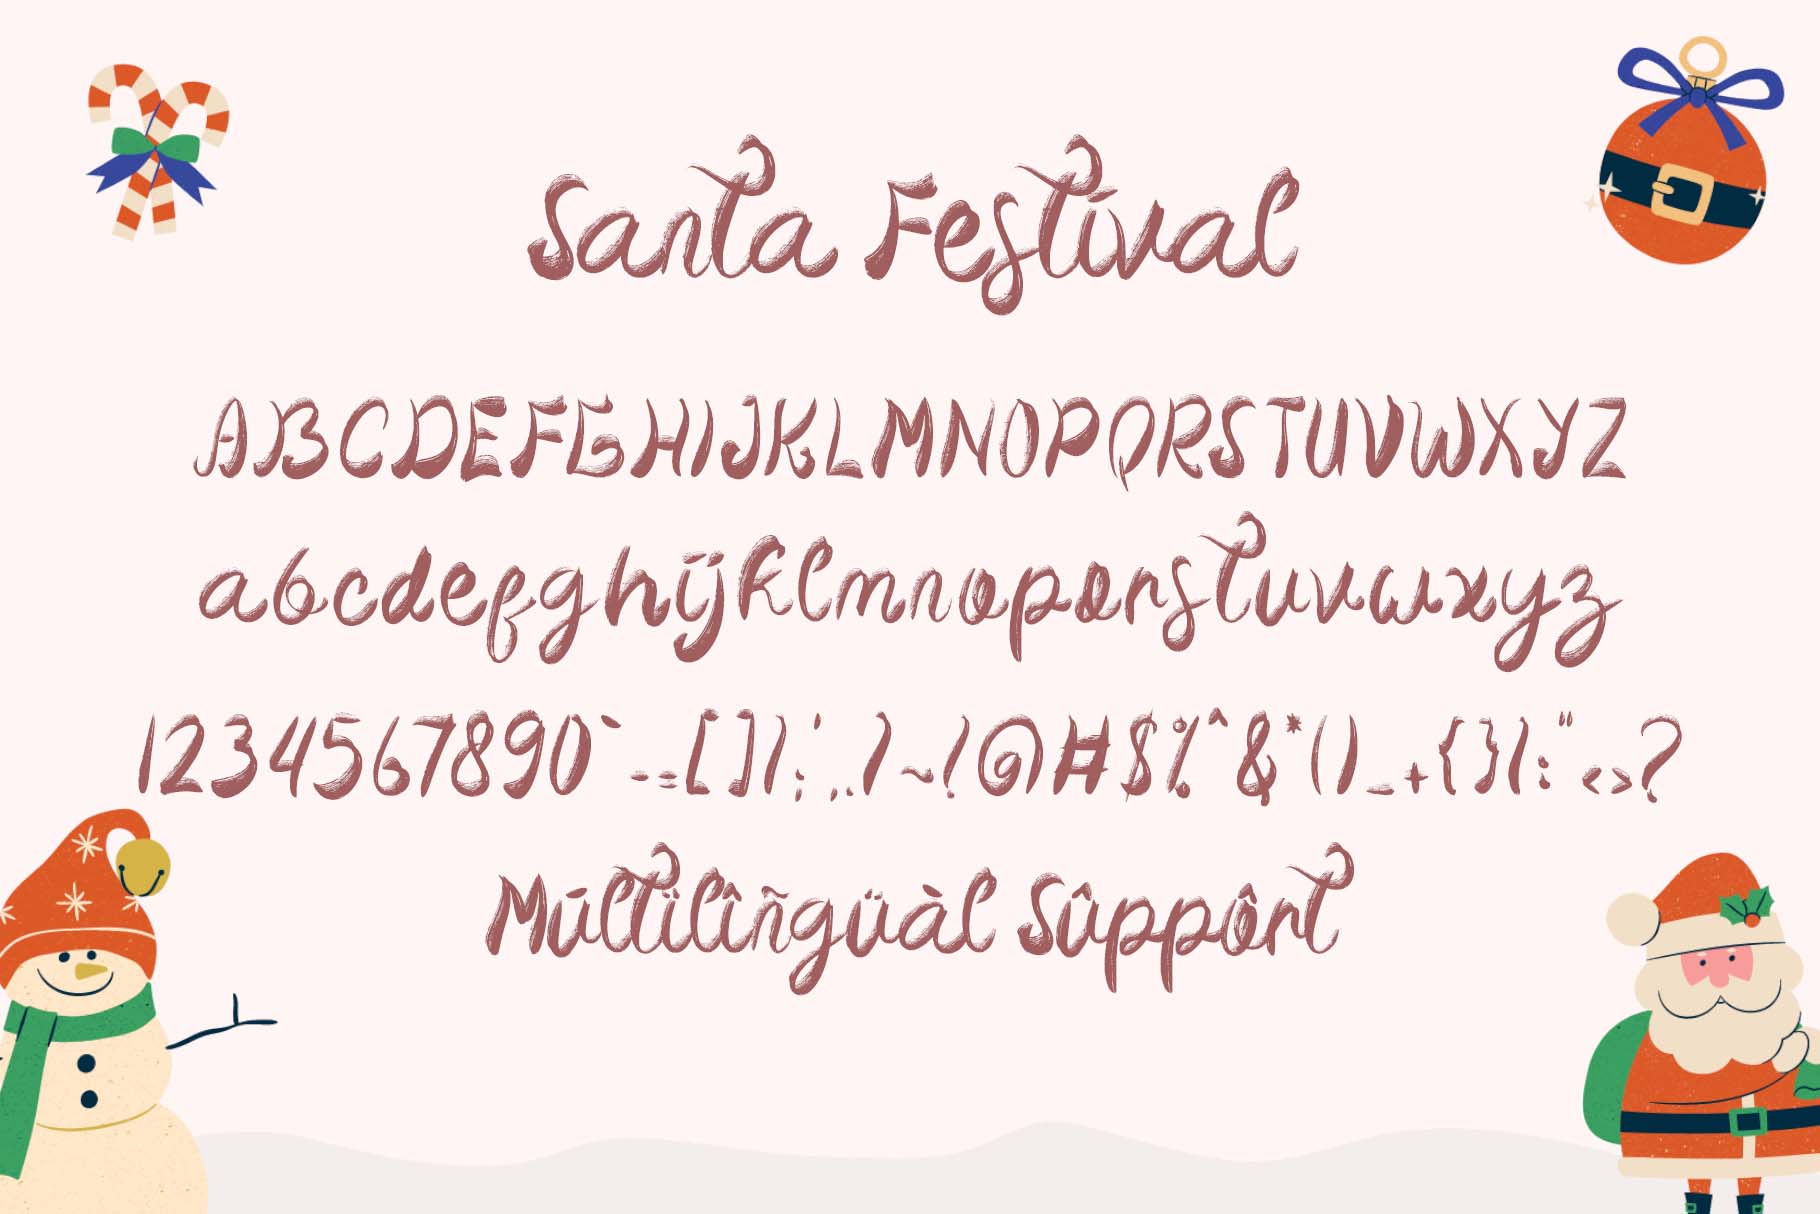 Santa Festival